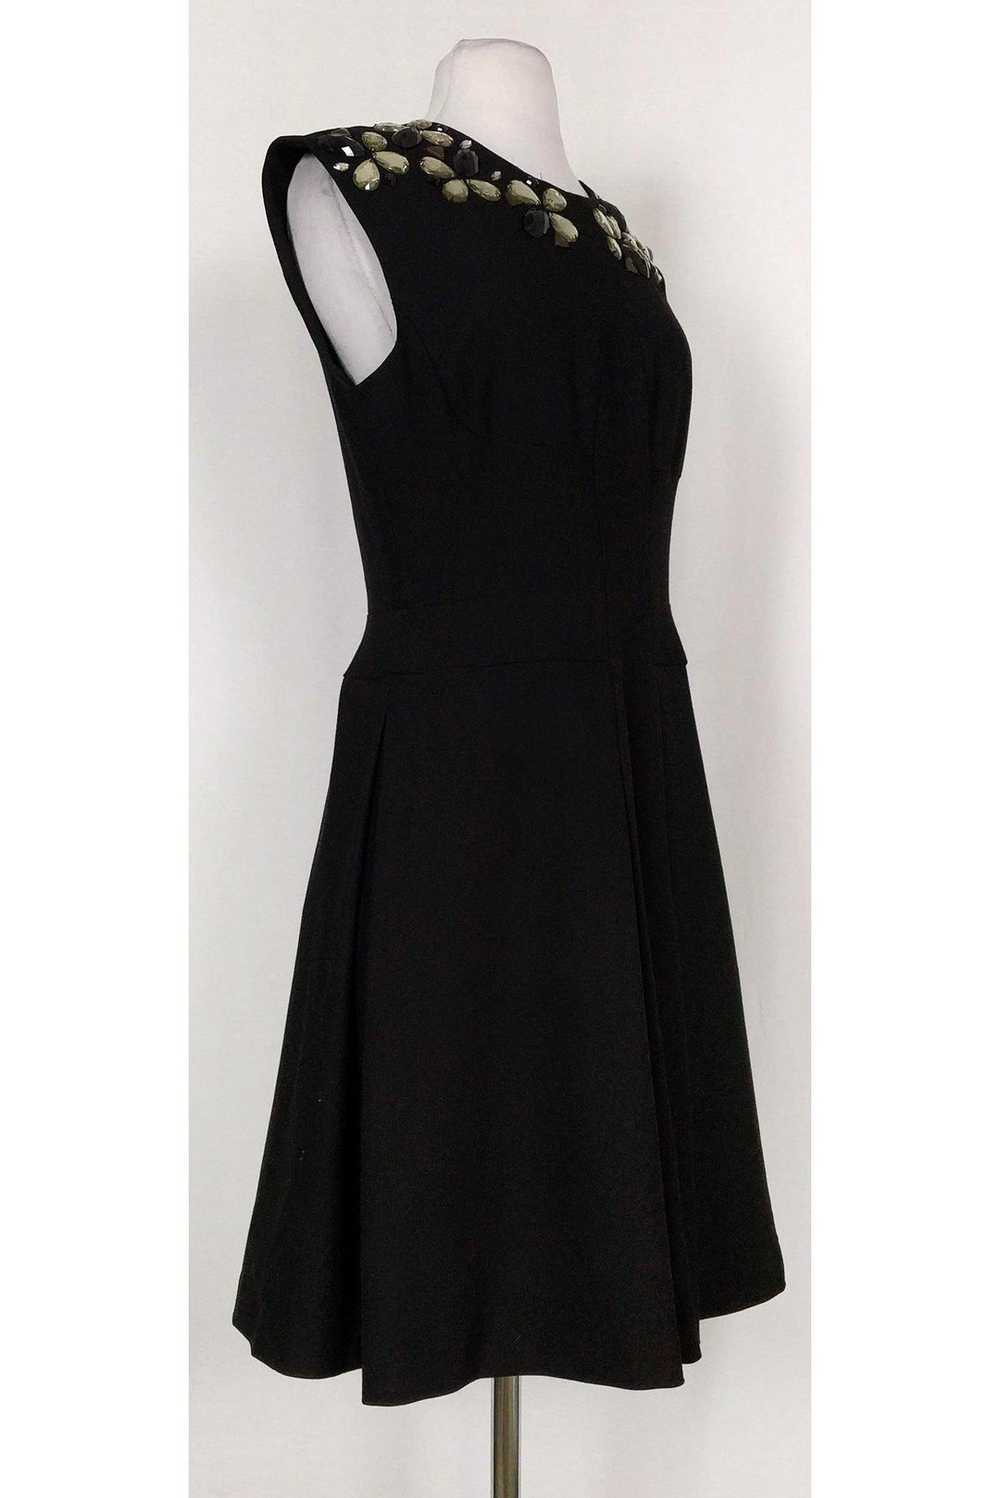 Tracy Reese - Black Jeweled Flared Dress Sz 8 - image 2